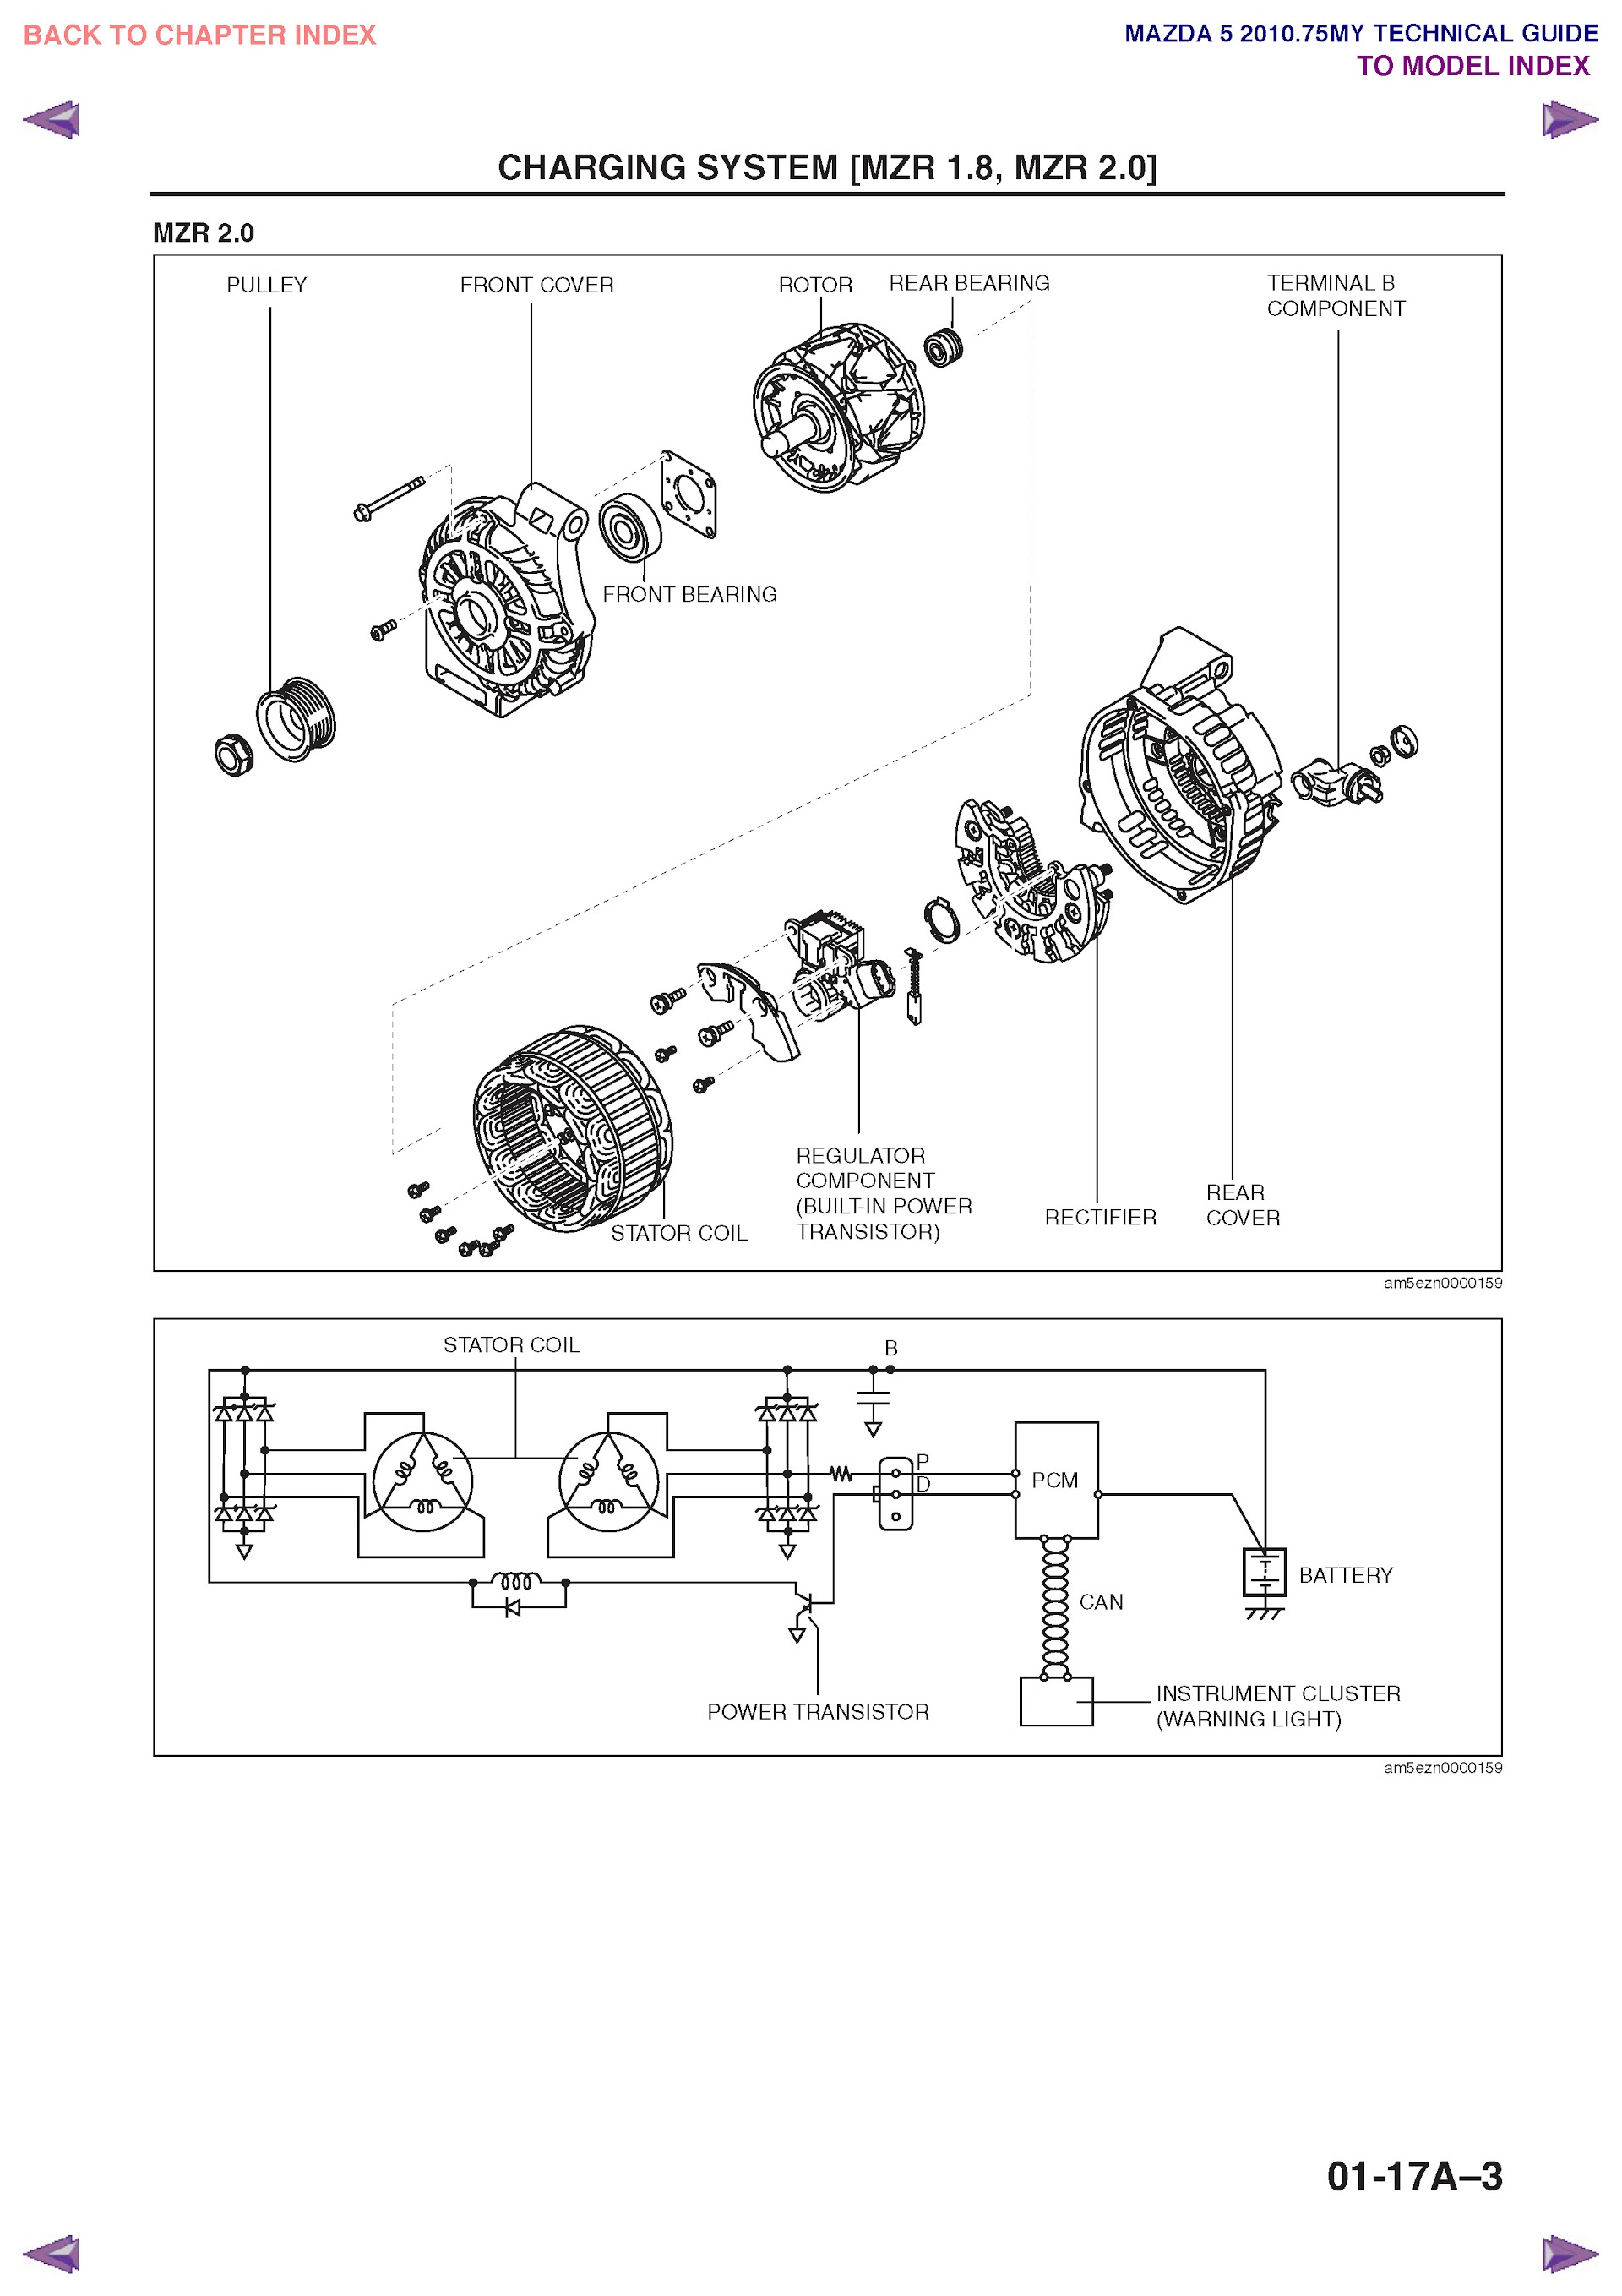 download the OEM service and workshop repair manual for 2010 Mazda mazda5 in PDF. 